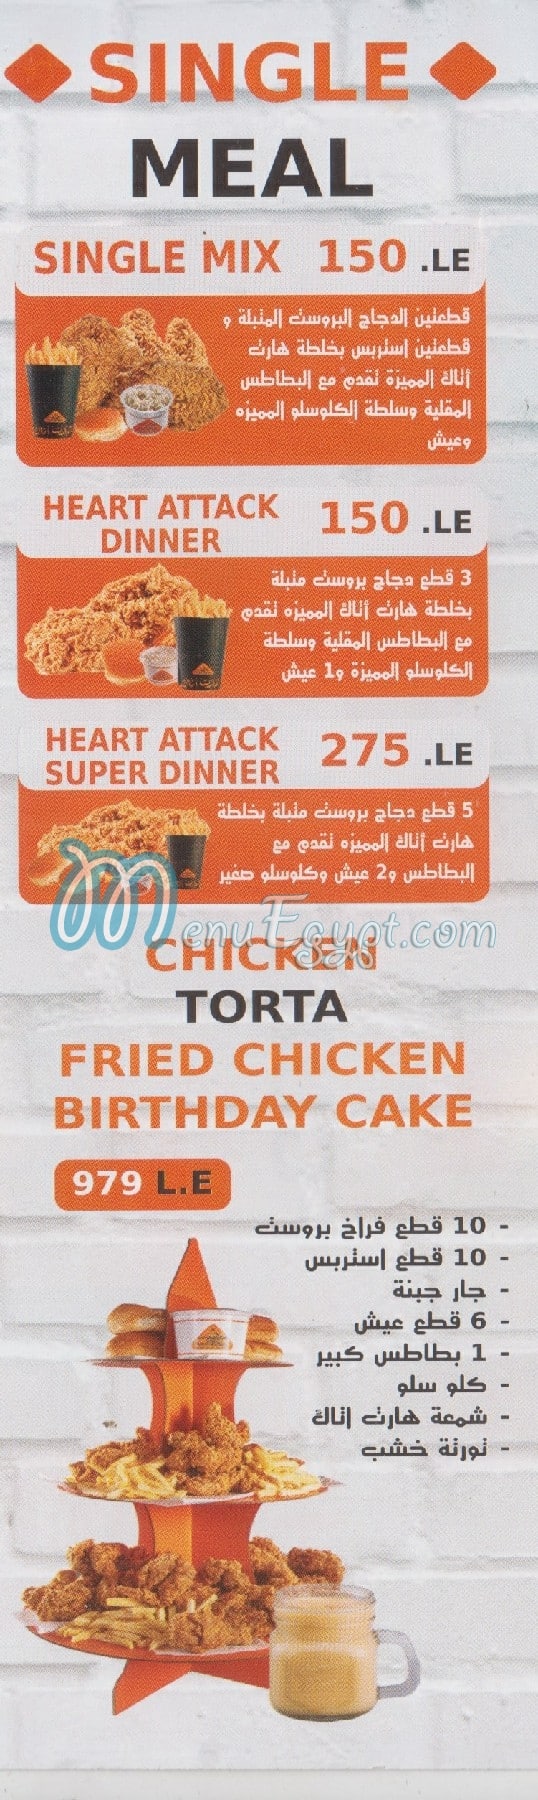 Heart Attack Fried Chicken menu